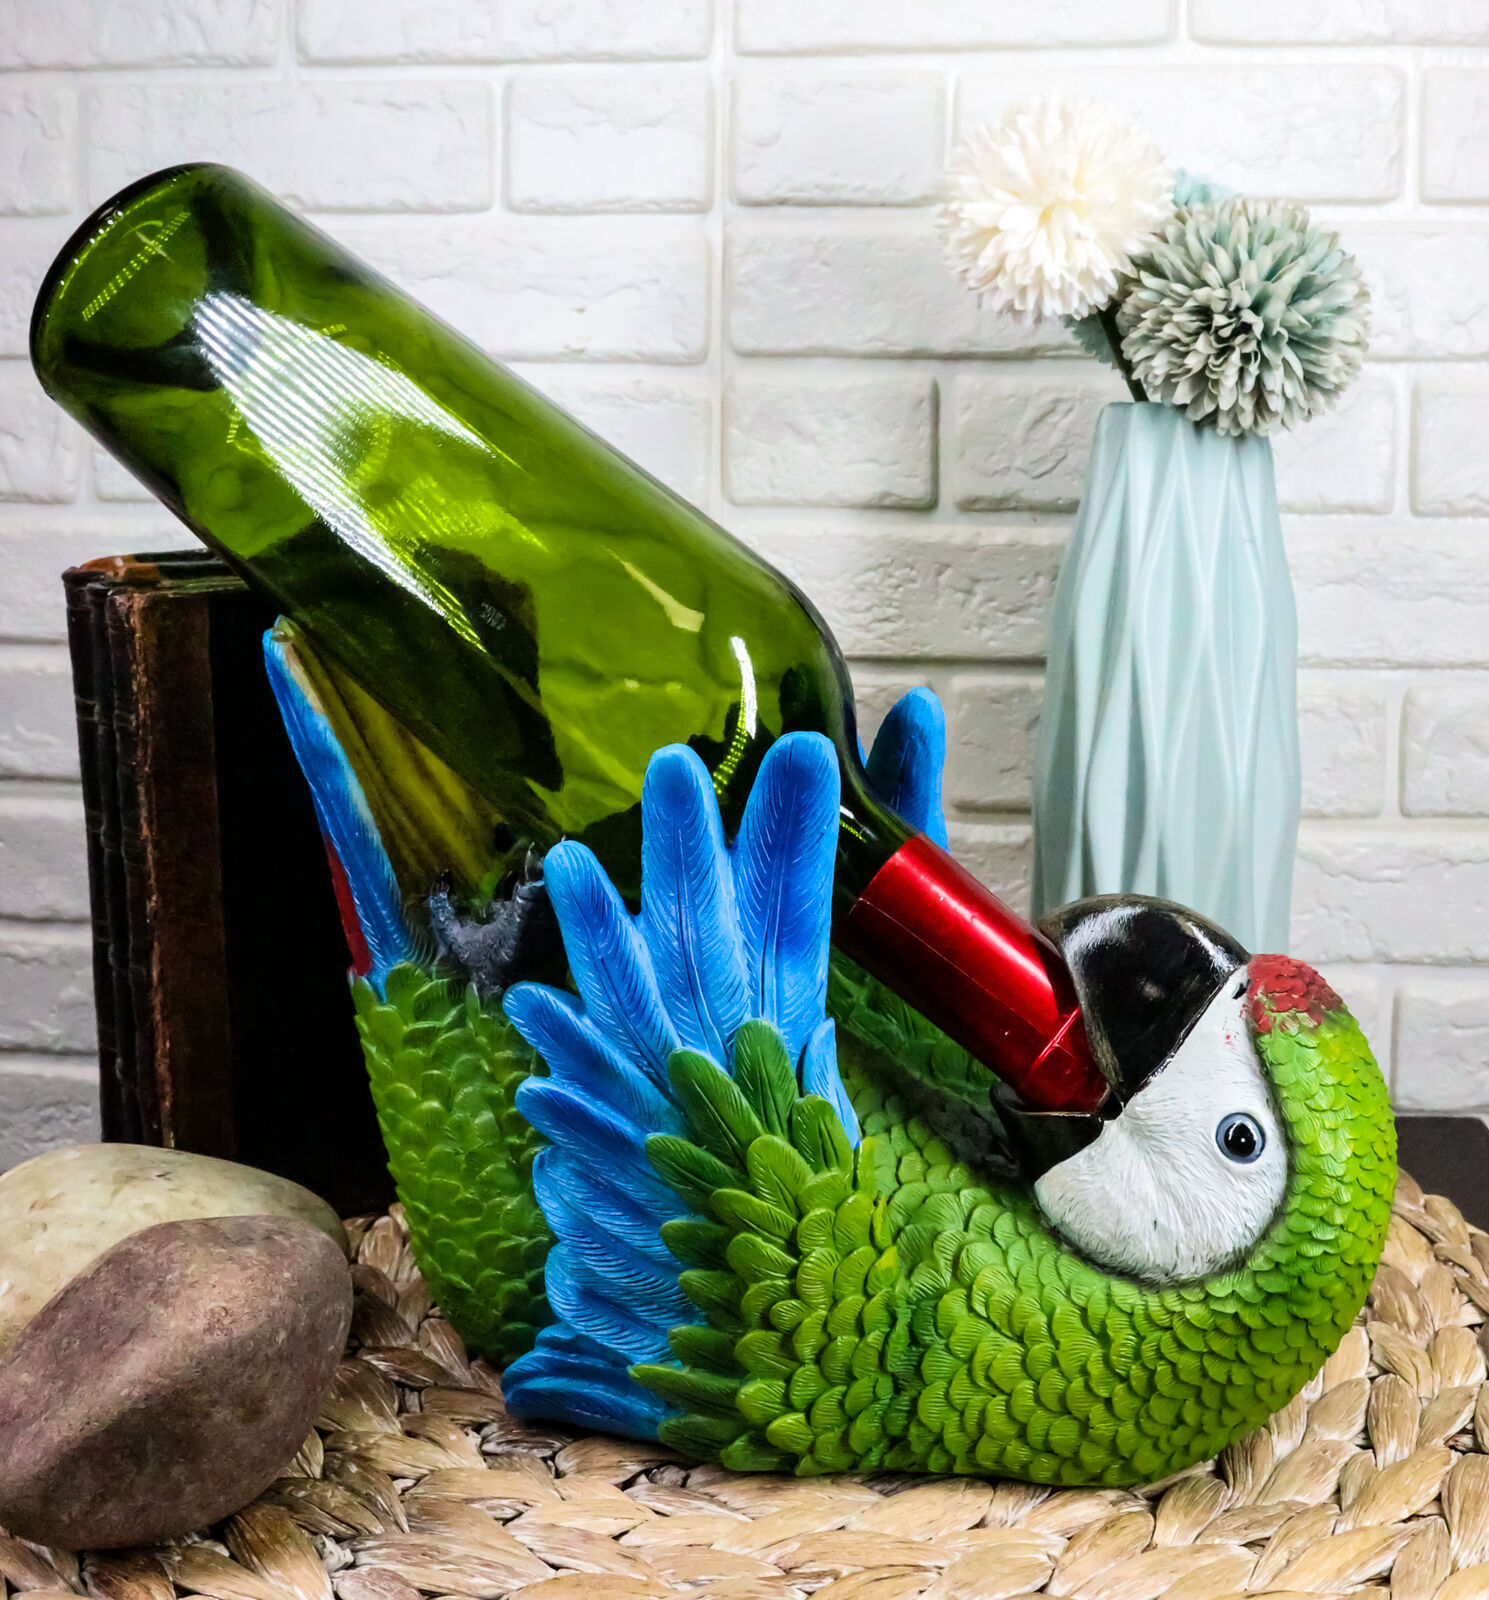 Ebros Rio Rainforest Jungle Green Scarlet Macaw Parrot Wine Bottle Holder - $33.99